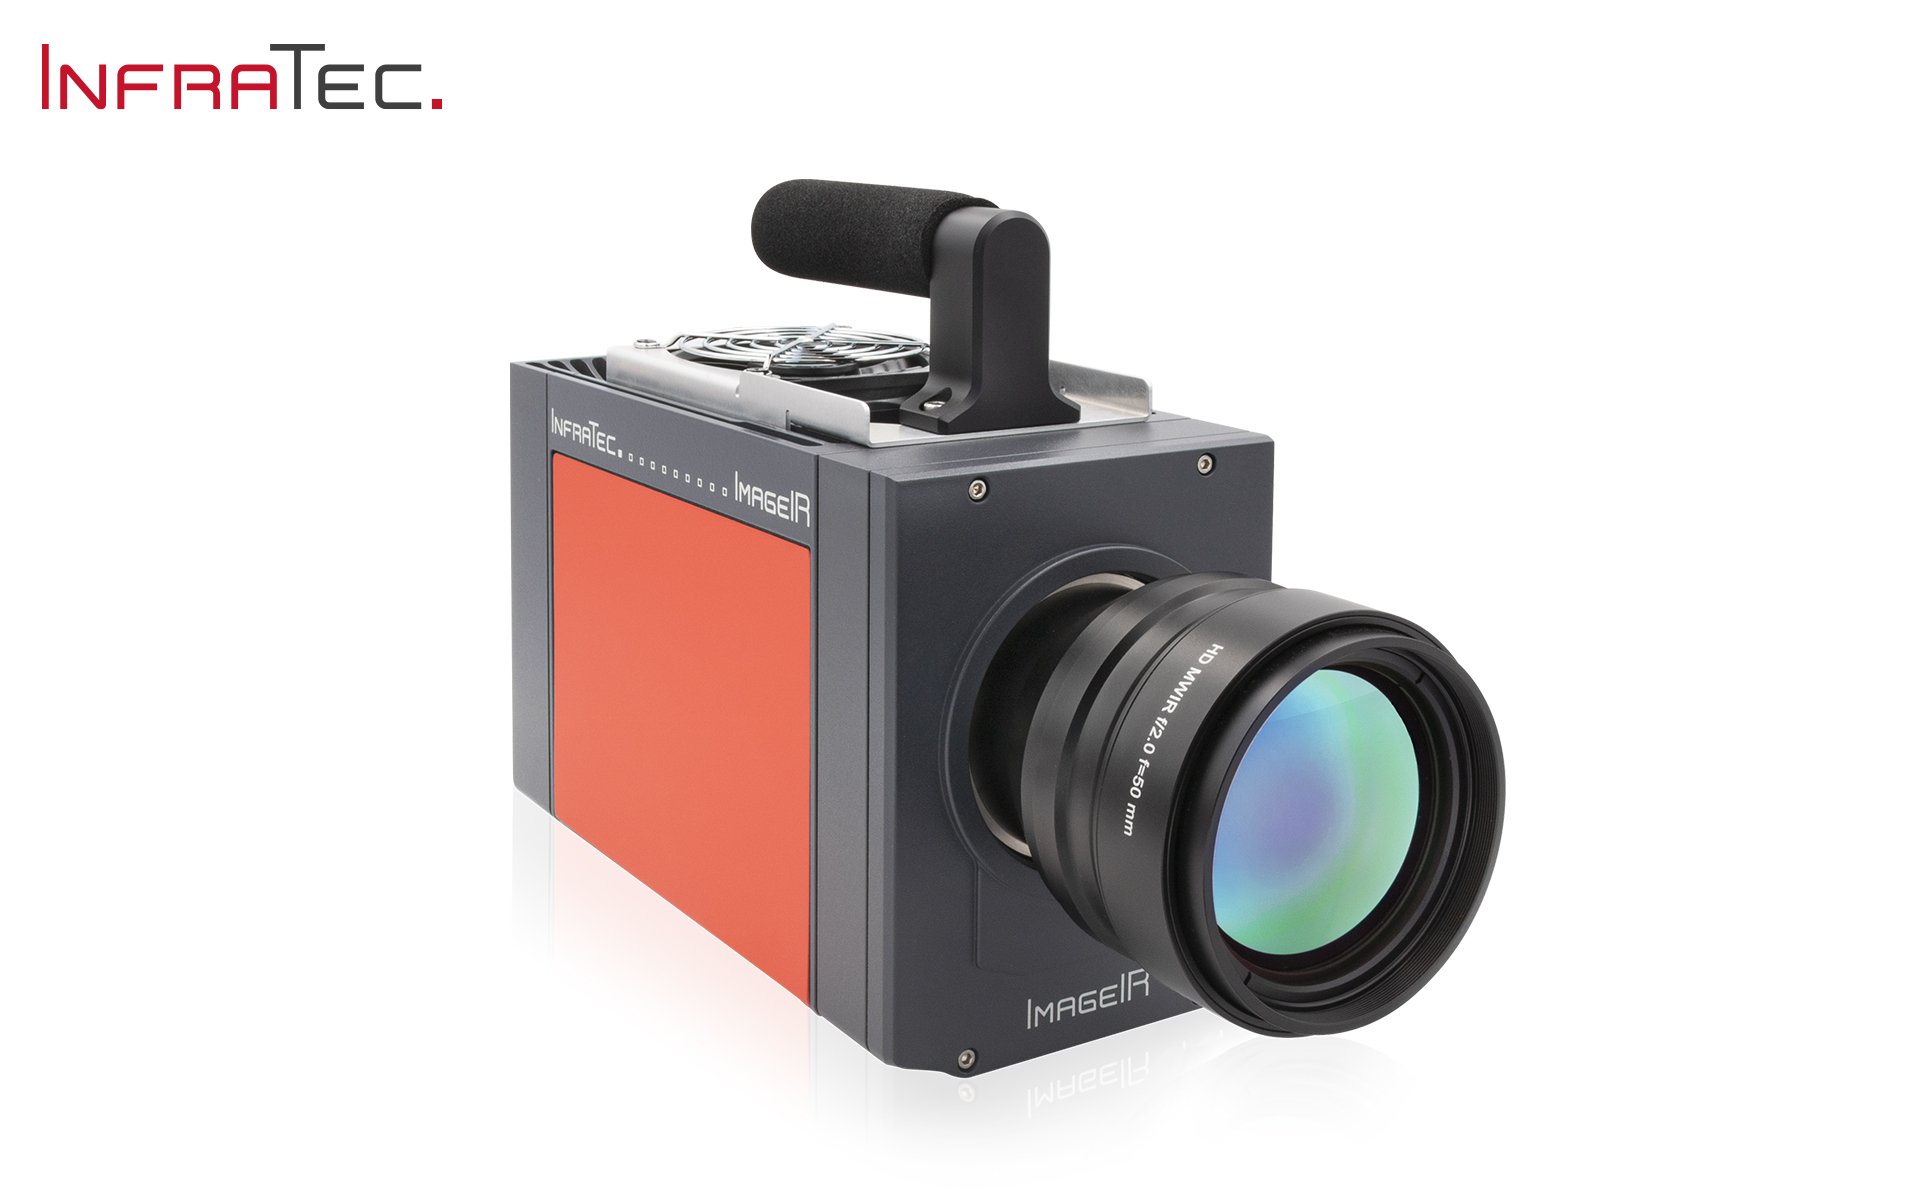 Infrared Camera Series ImageIR® 8300 hs